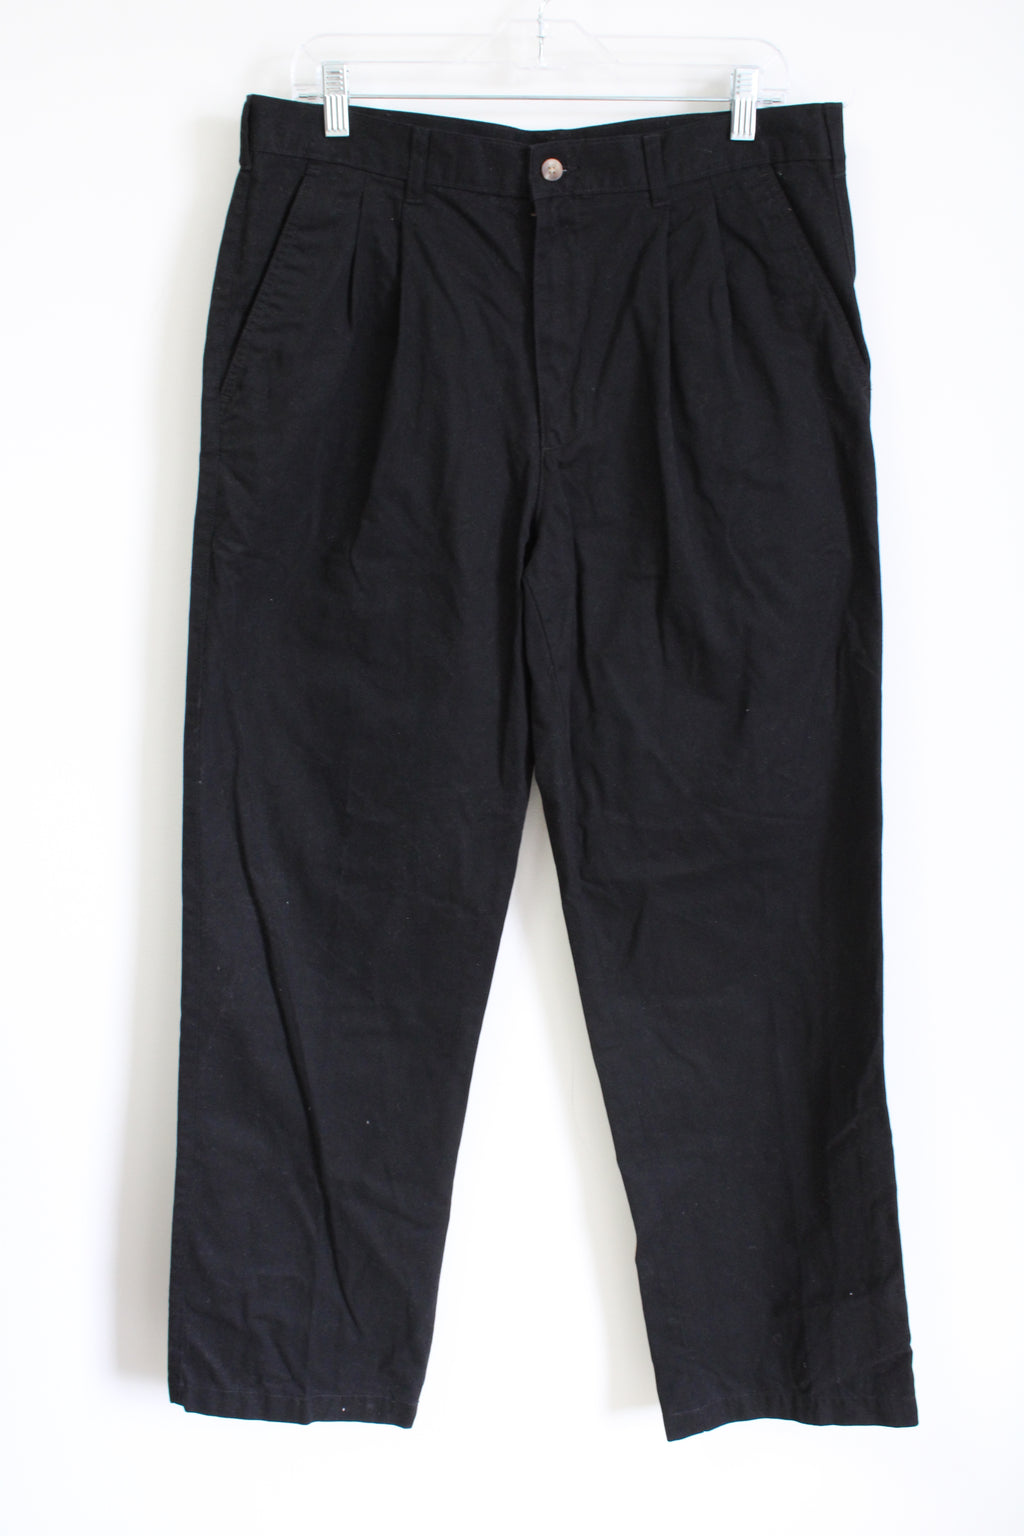 George Black Khaki Pants | 34X32